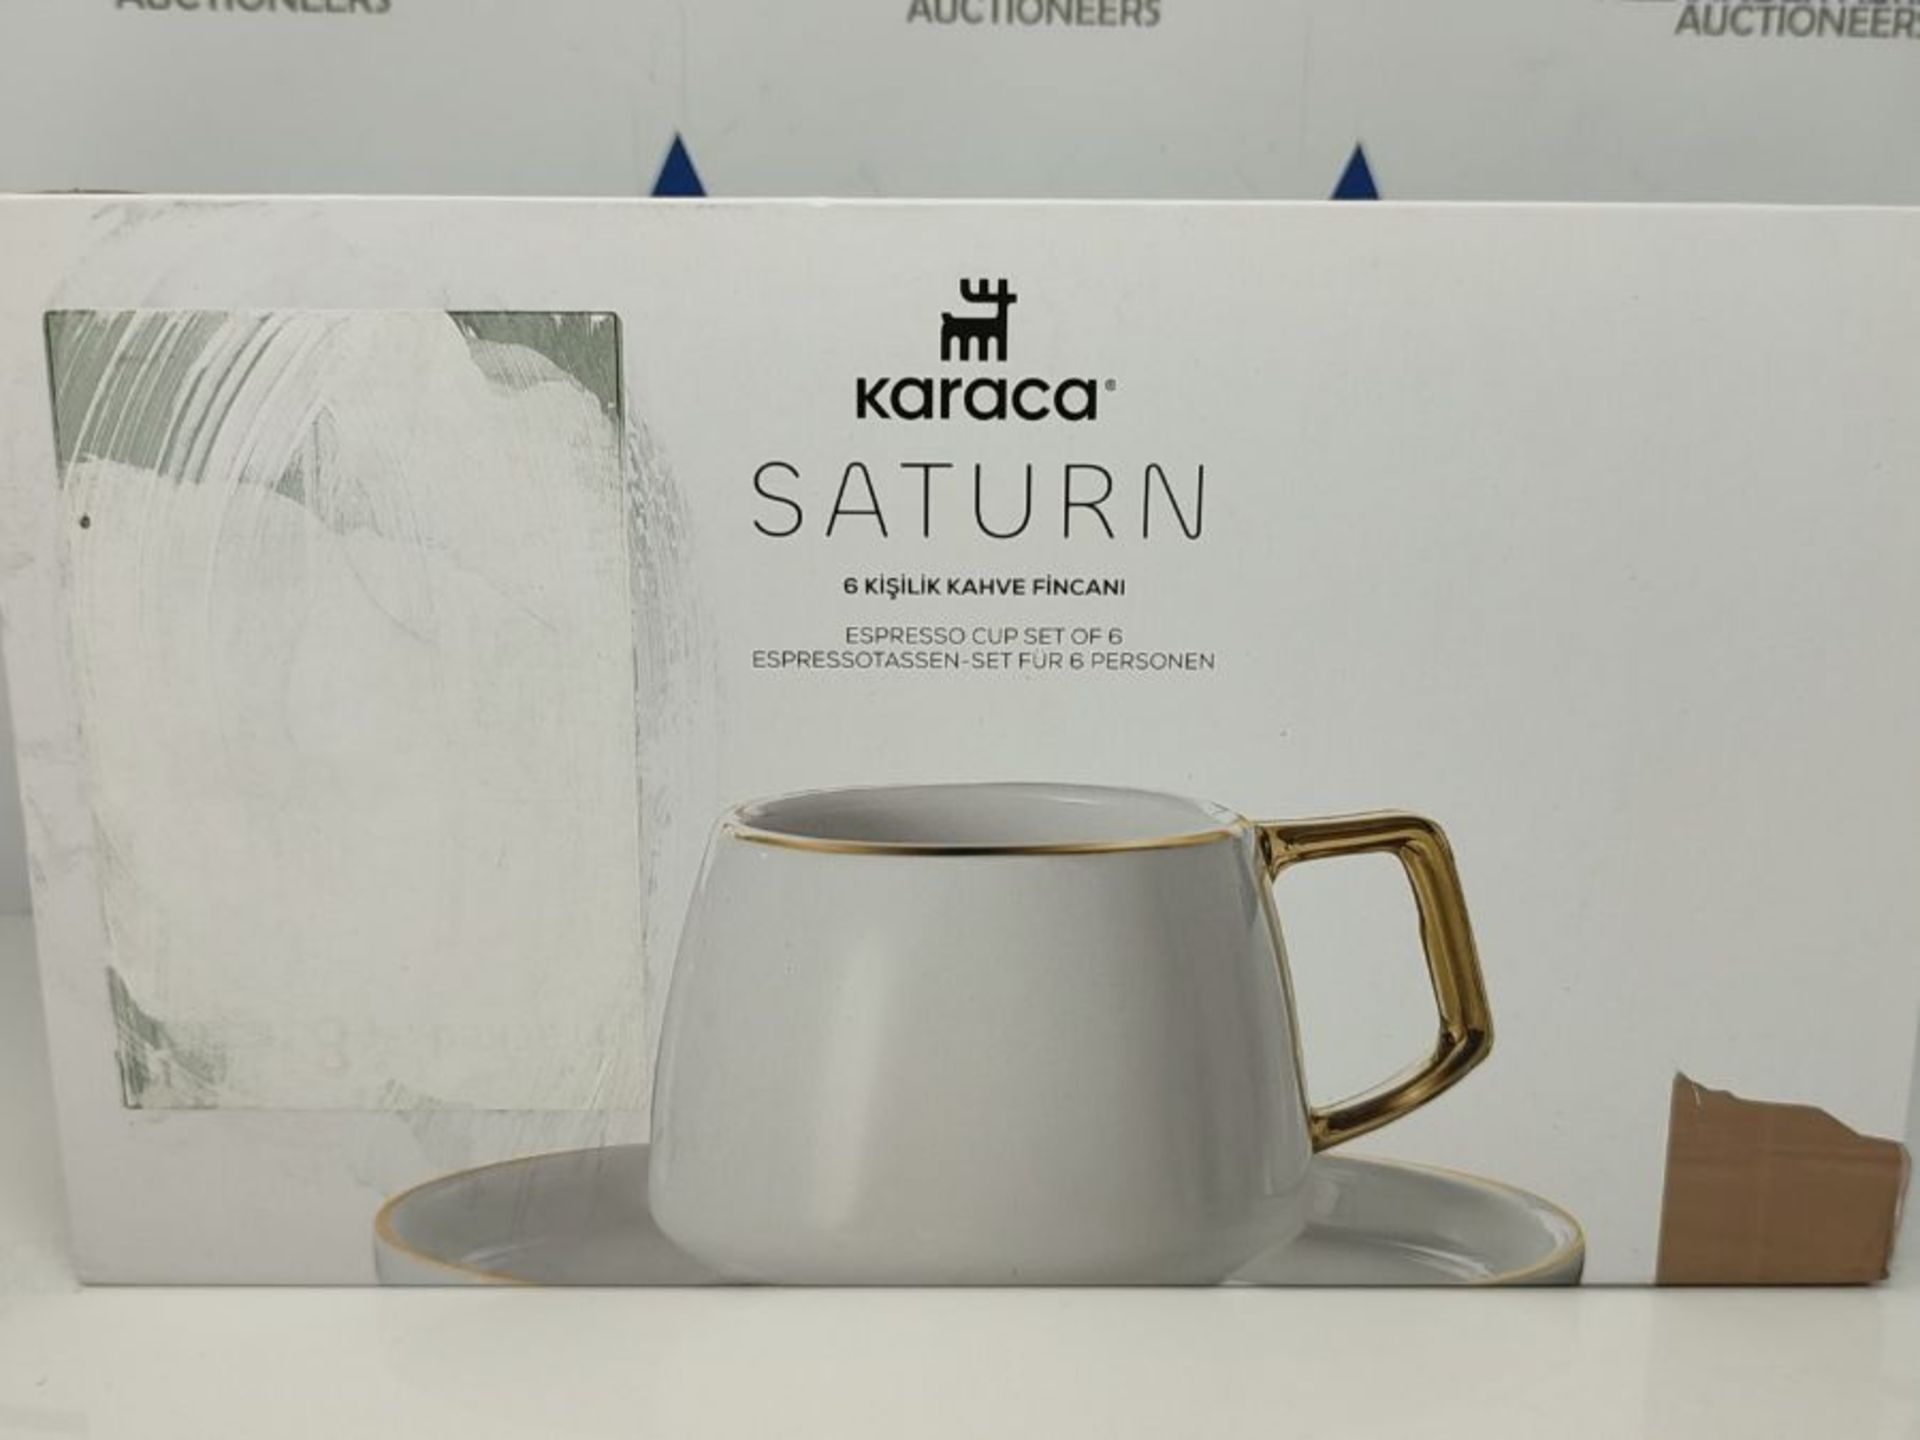 KARACA Saturn Turkish Coffee Cups, Espresso Cups Set of 6 Includes 6 Pieces, 3 oz Espr - Image 2 of 3